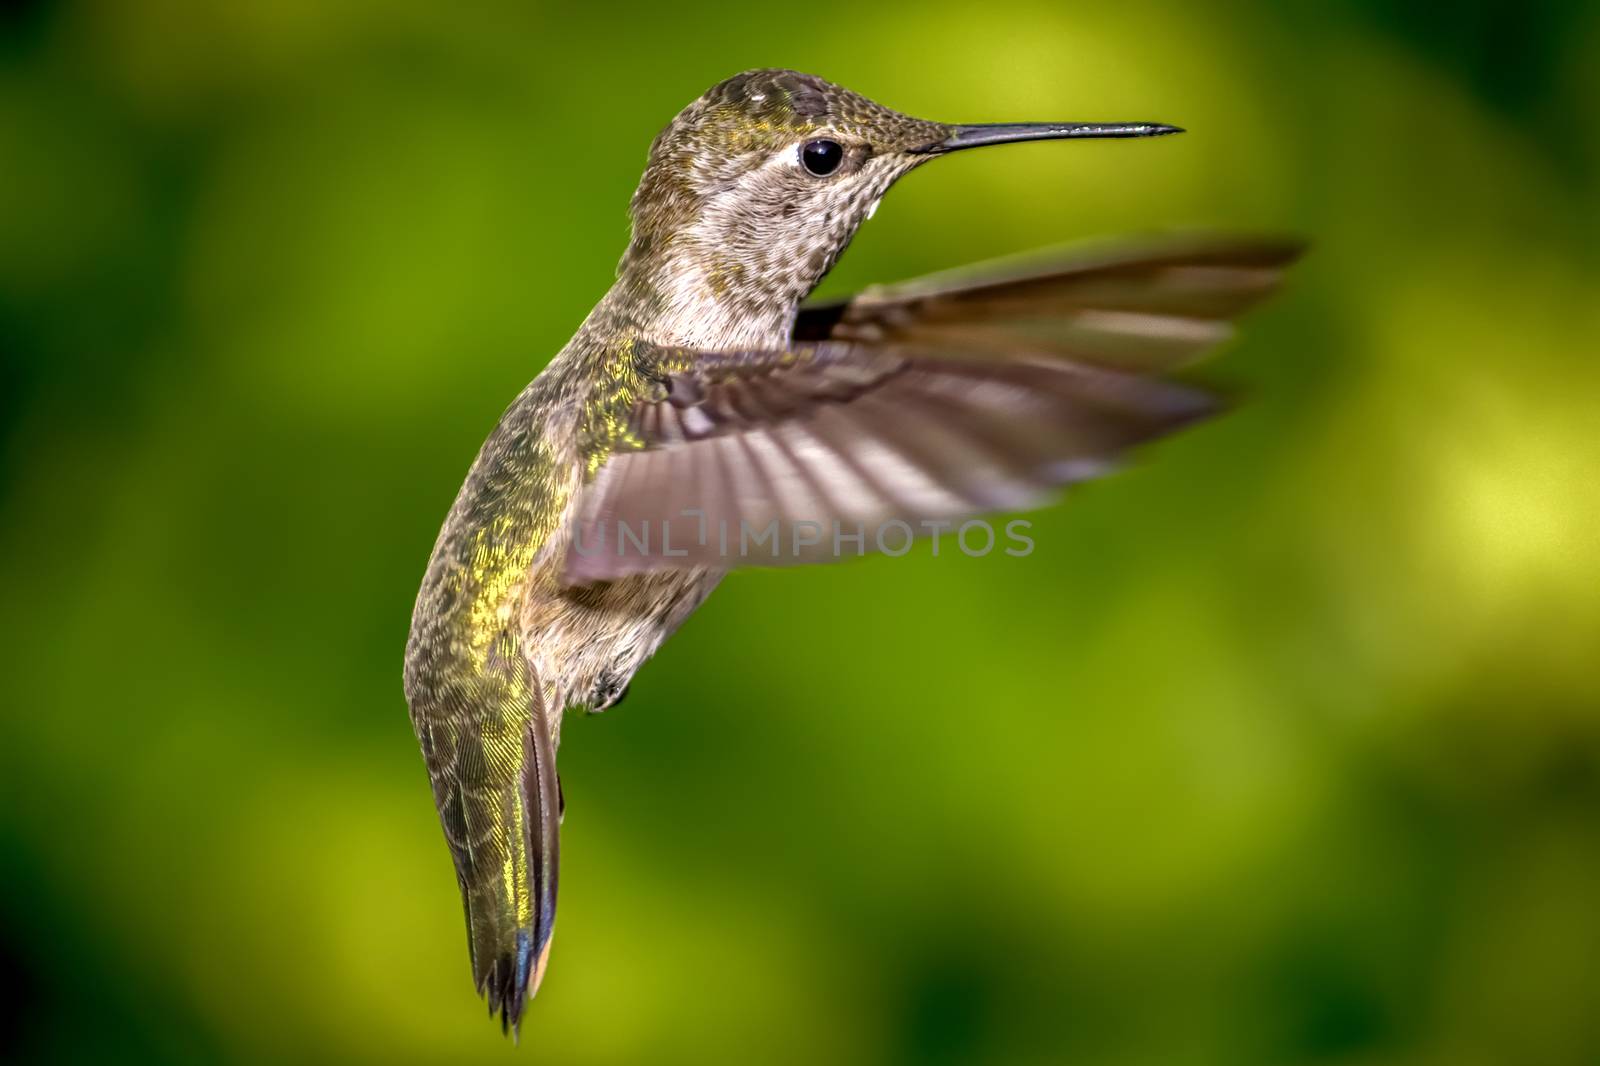 An Anna's hummingbird. Closeup. In flight. Day. Color image.